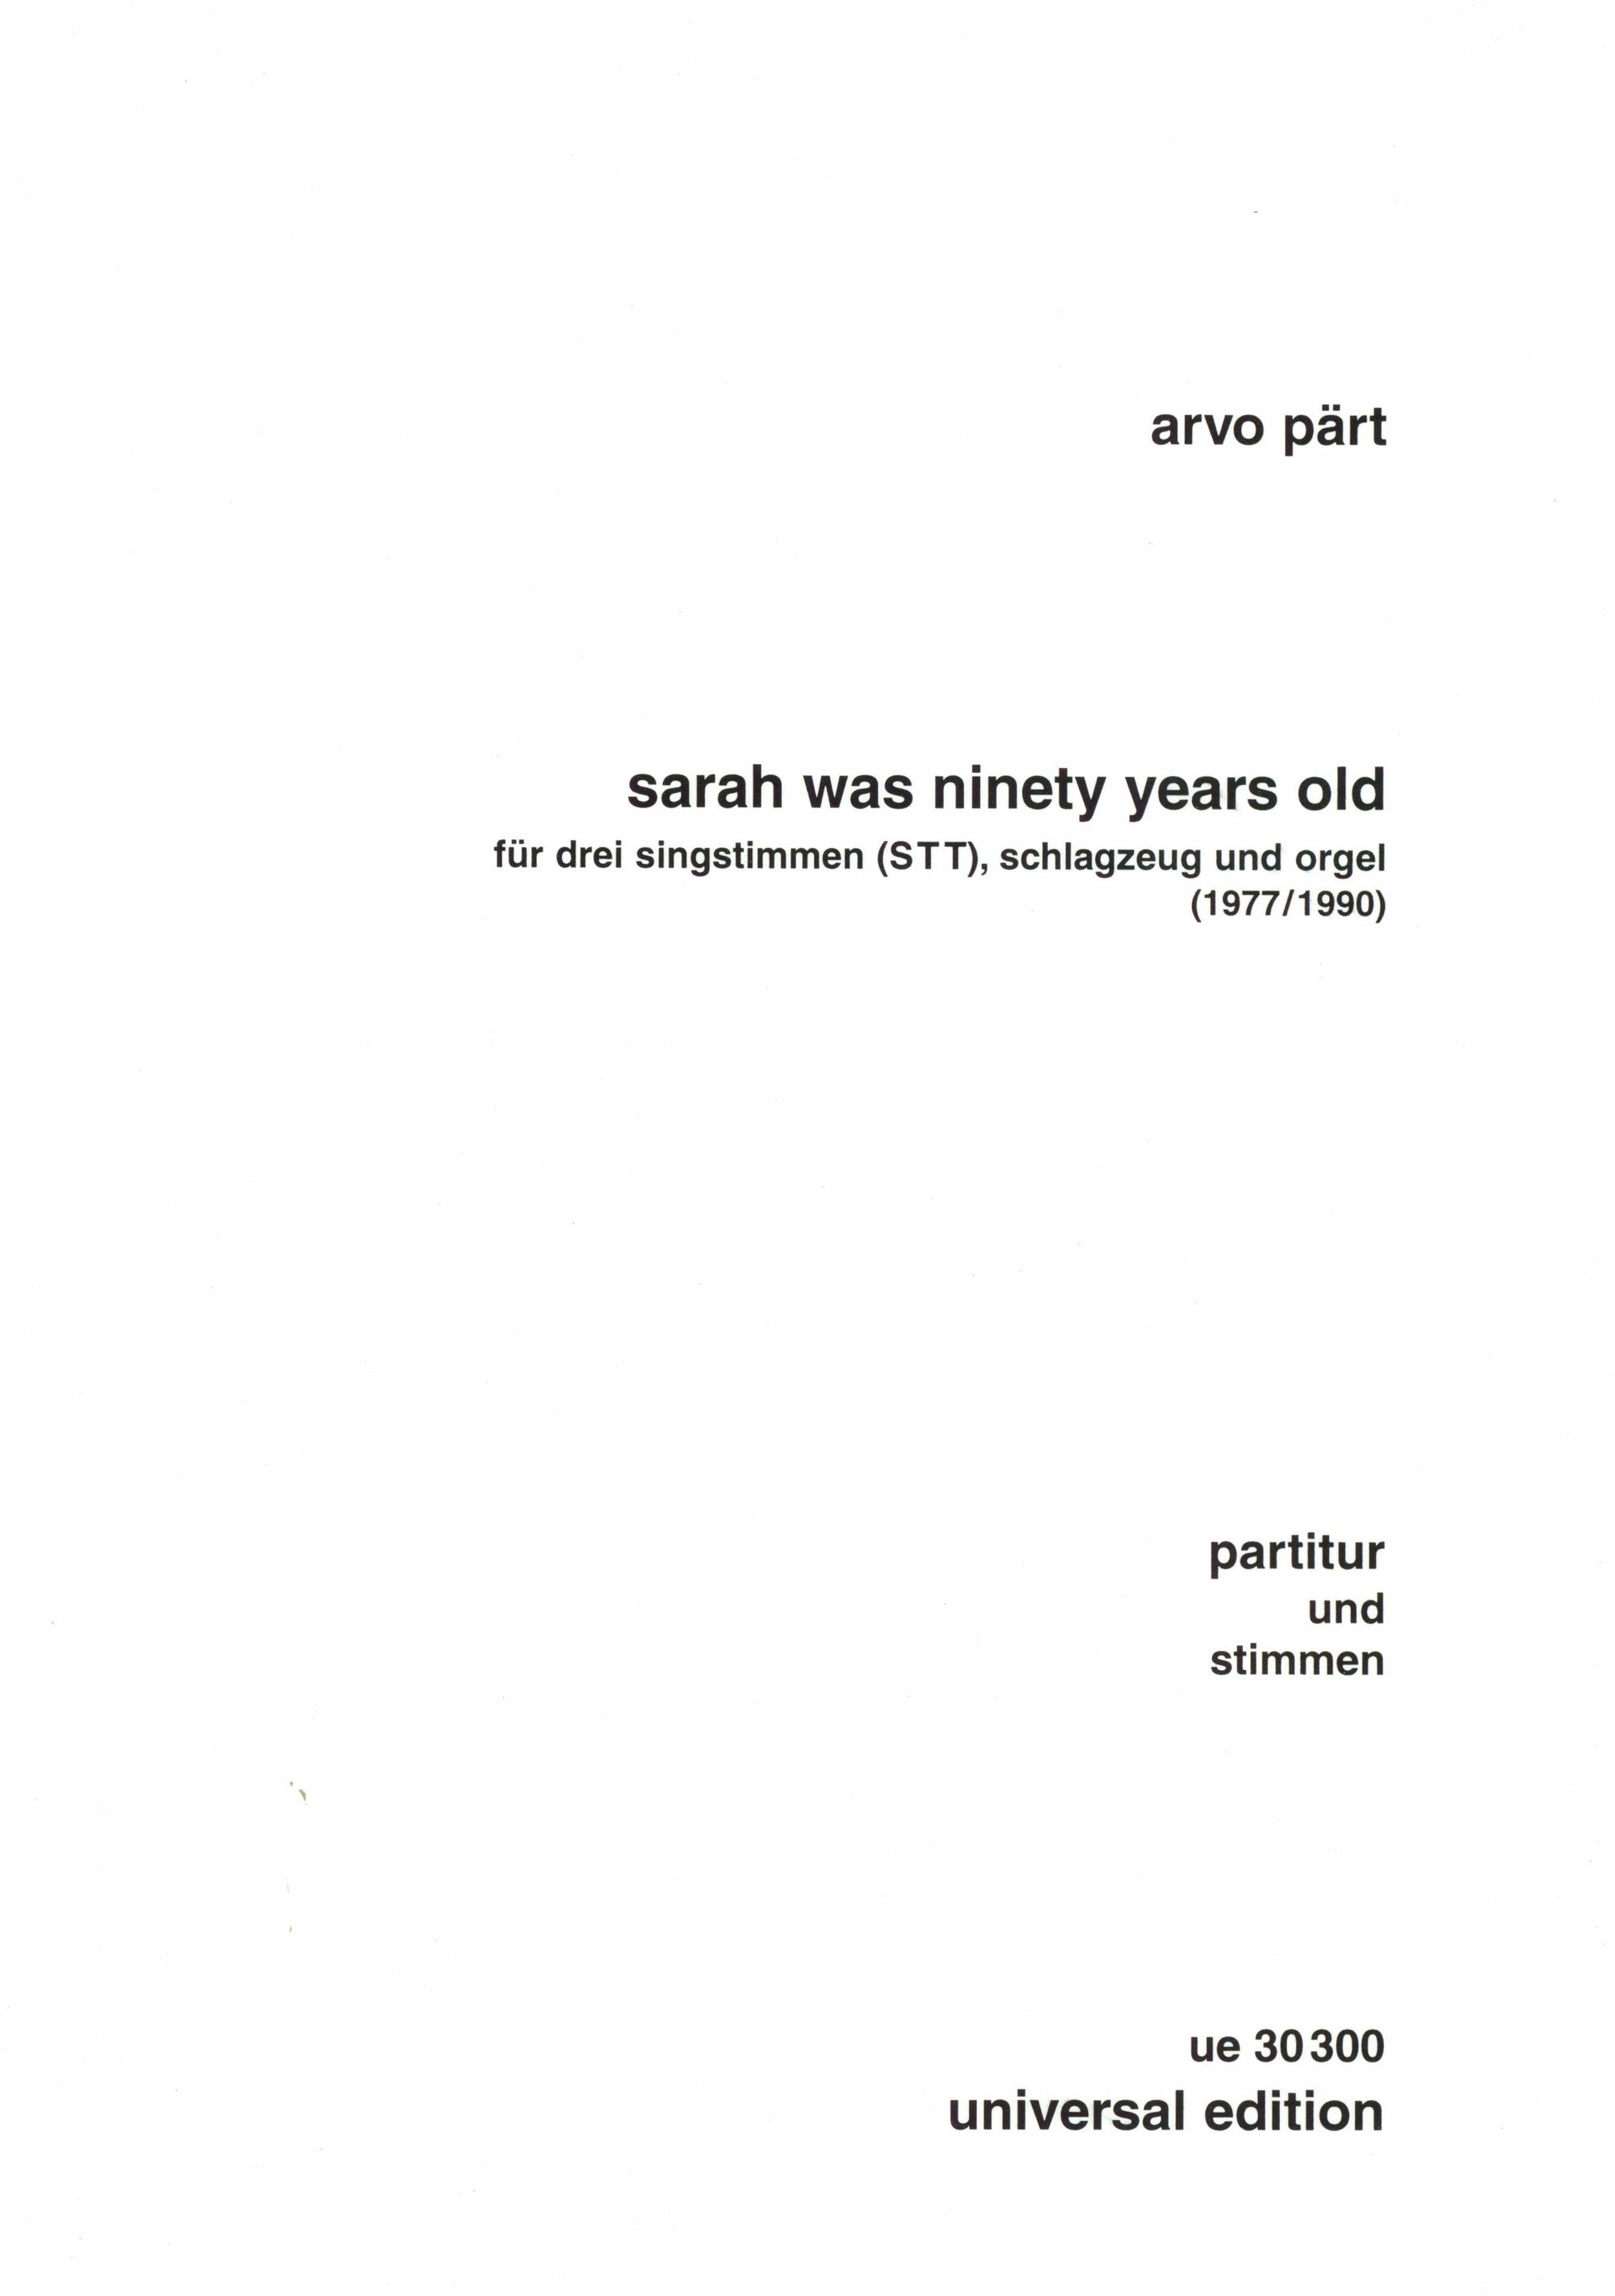 Pärt: sarah was ninety years old